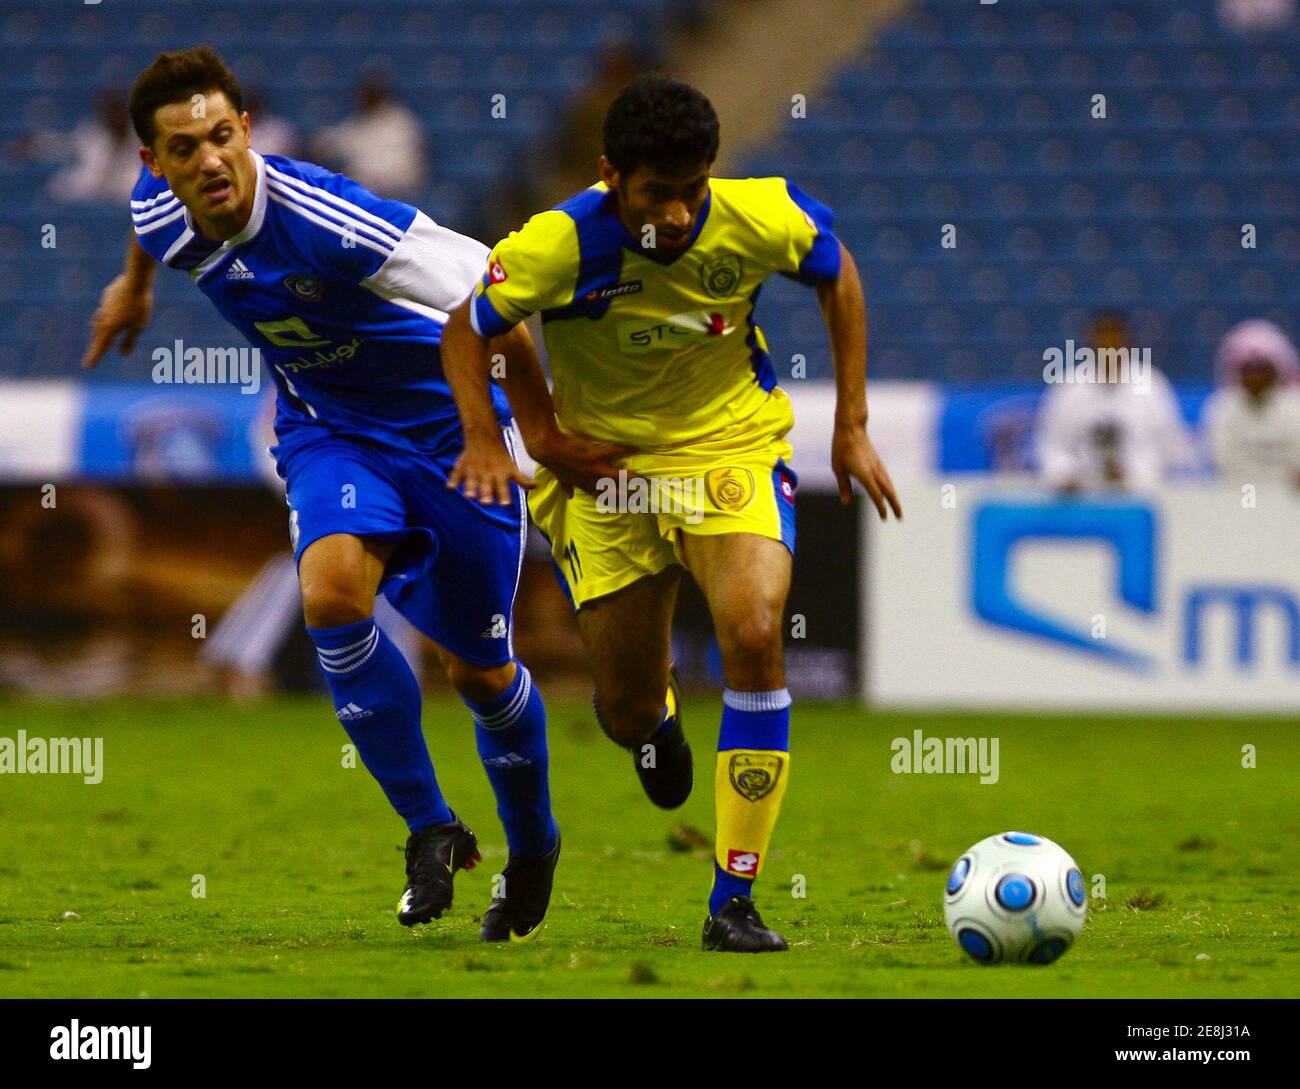 Al-Hilal's Christian Wilhelmsson (L) fights for the ball with Al Nasr's Saad Al Harthi during their Saudi Super League soccer match in Riyadh September 29, 2009. REUTERS/Fahad Shadeed     (SAUDI ARABIA SPORT SOCCER) Stock Photo